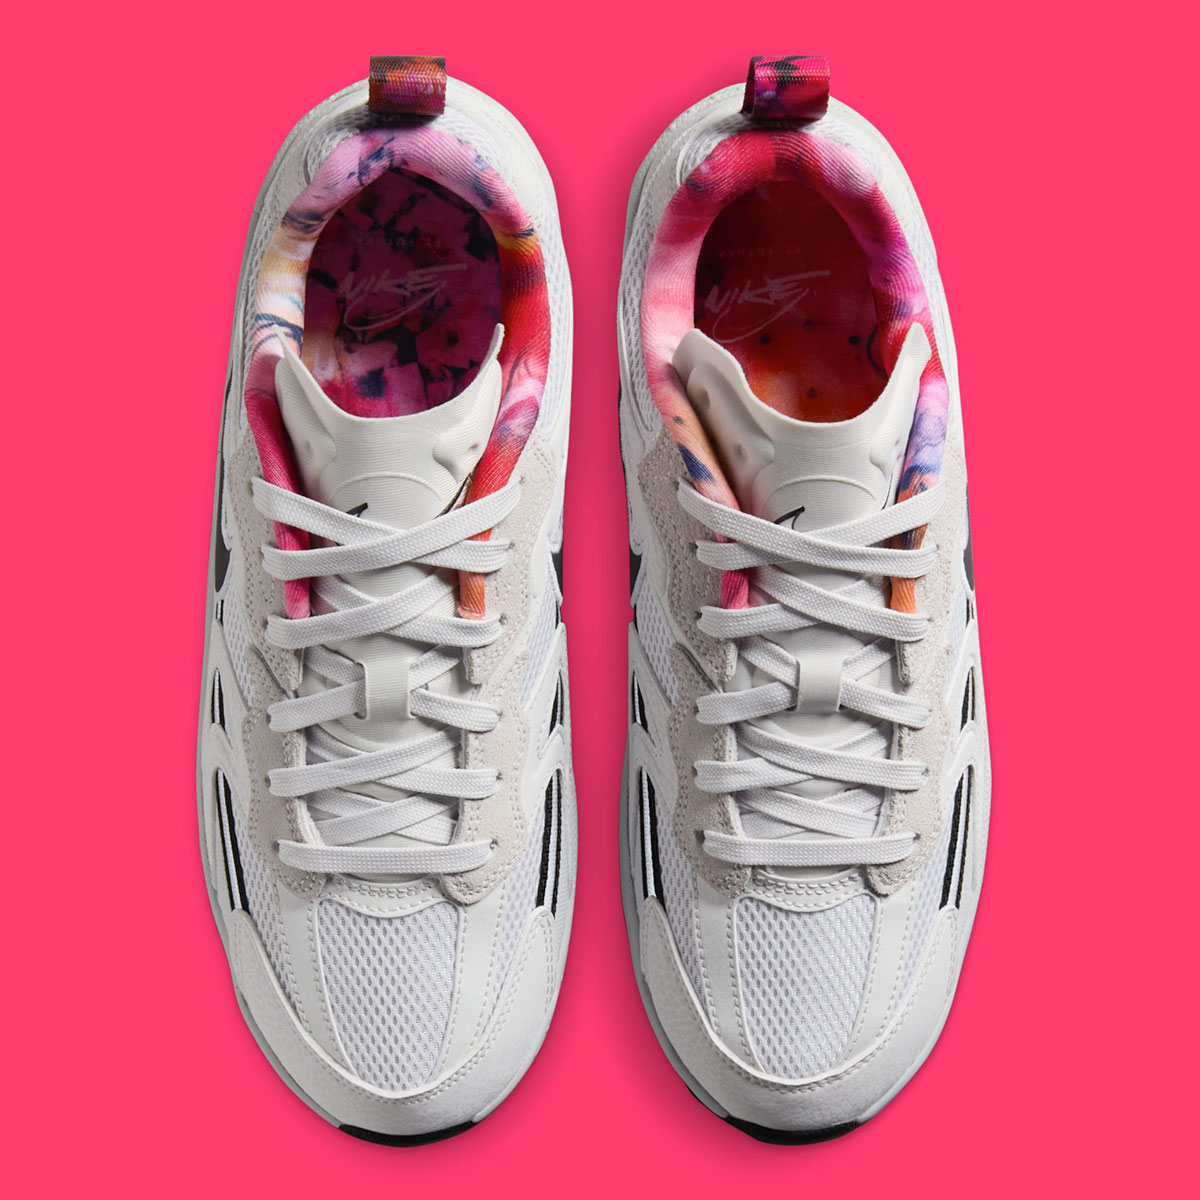 Futura Nike Jam Breakdancing Shoe Release Date 5